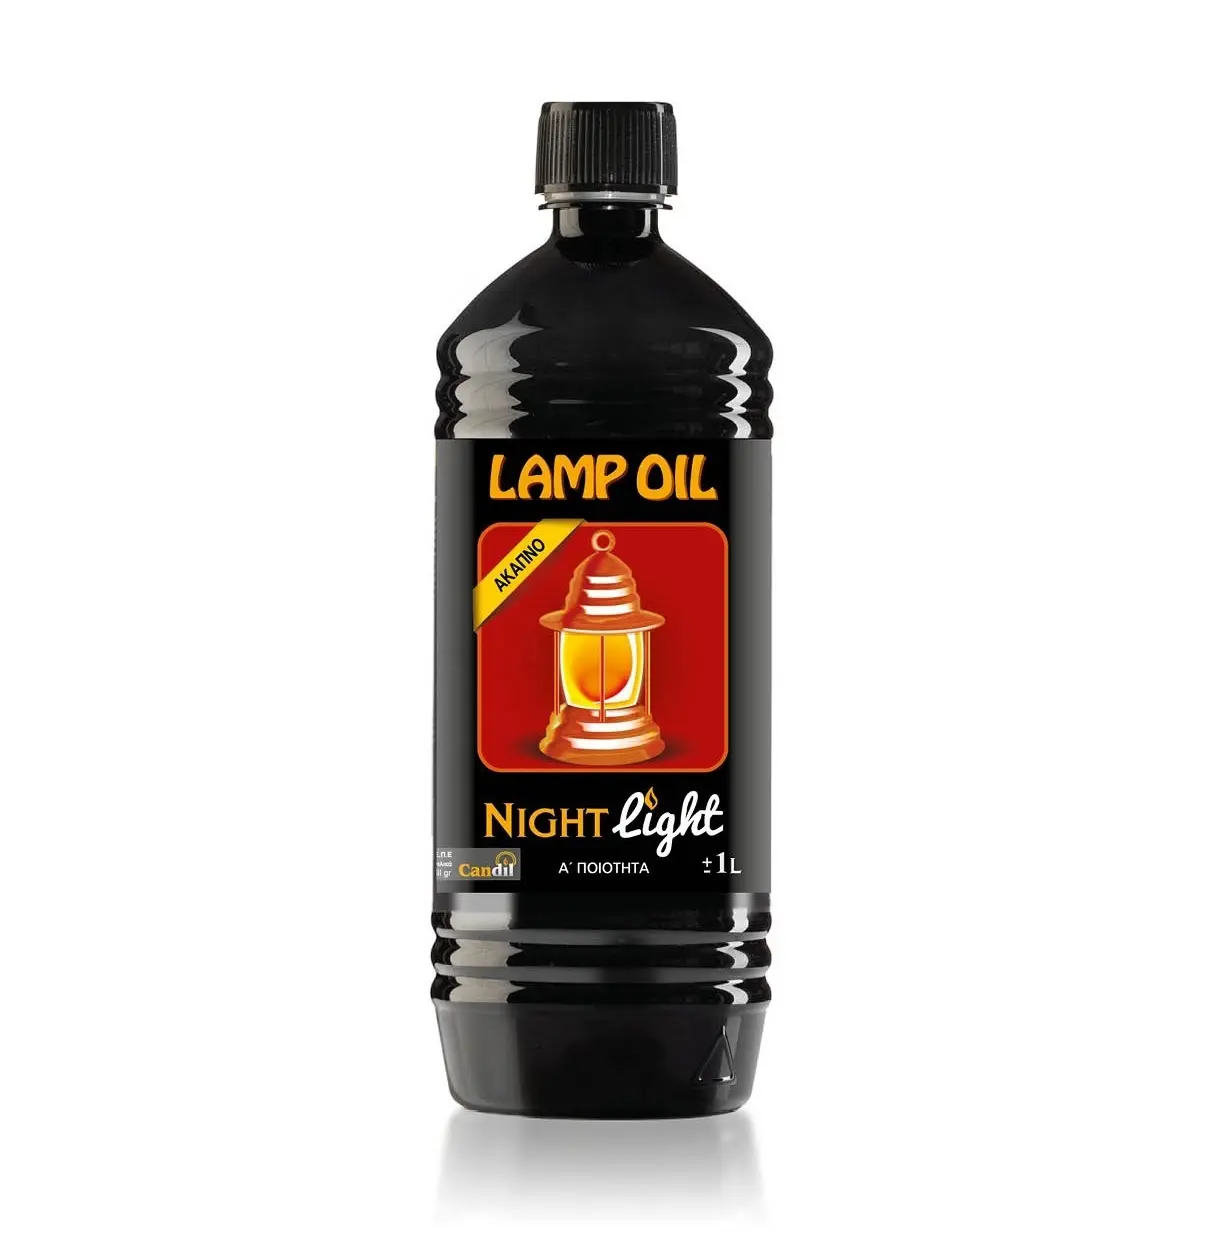 Black pet bottle smokeless child proof low odor nightlight liquid wax oil lamp paraffin oil for outdoor use